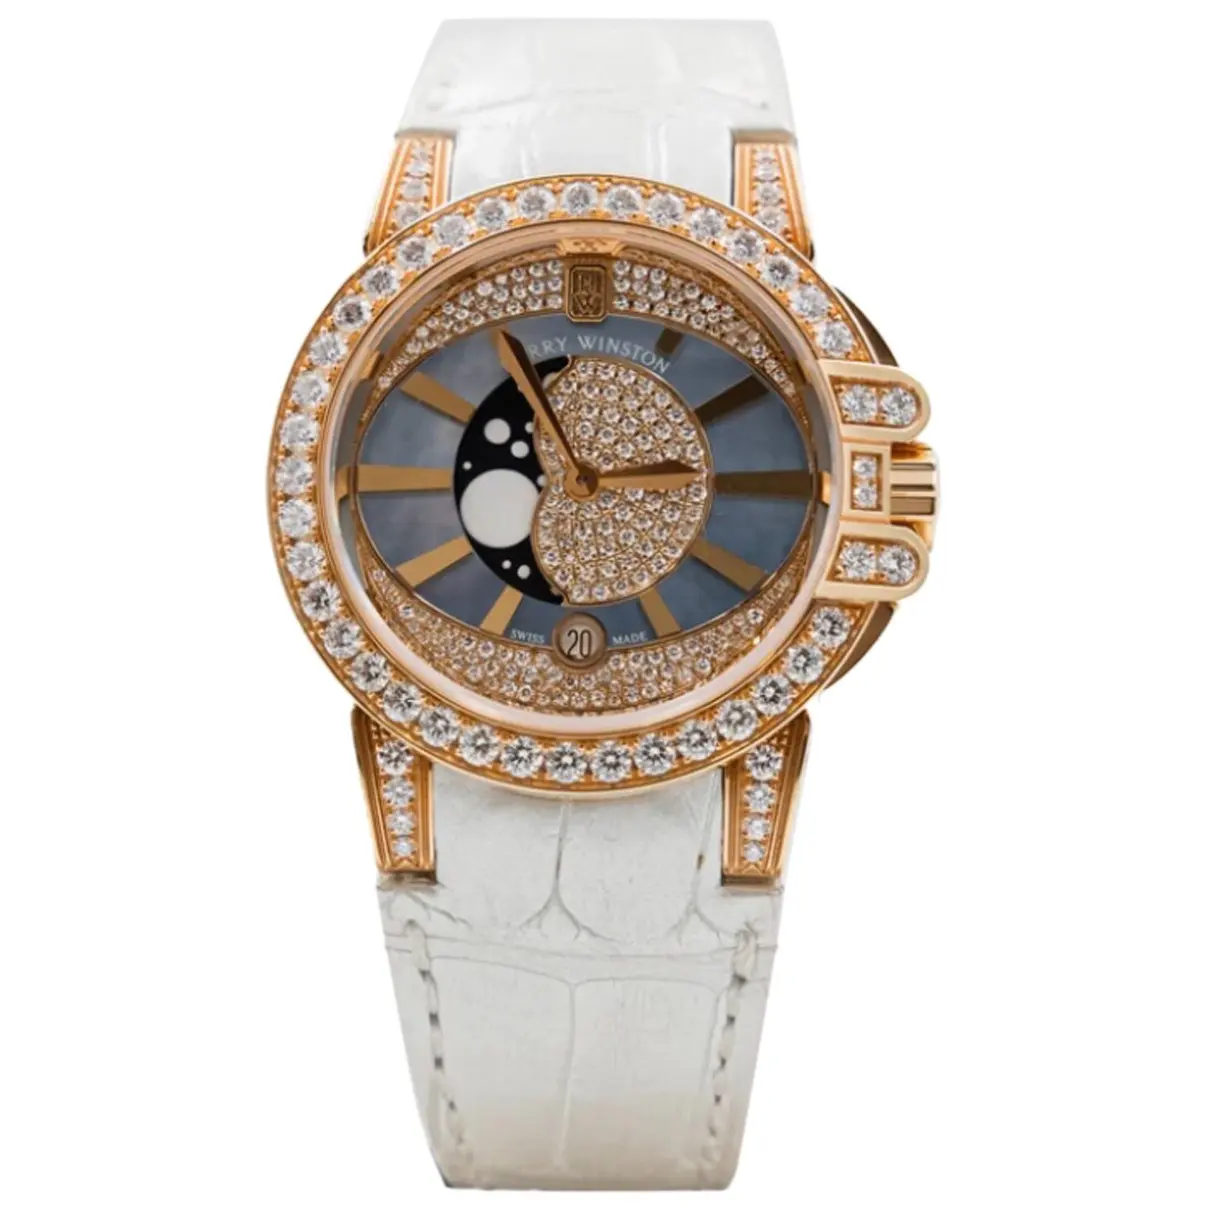 Pink gold watch Harry Winston